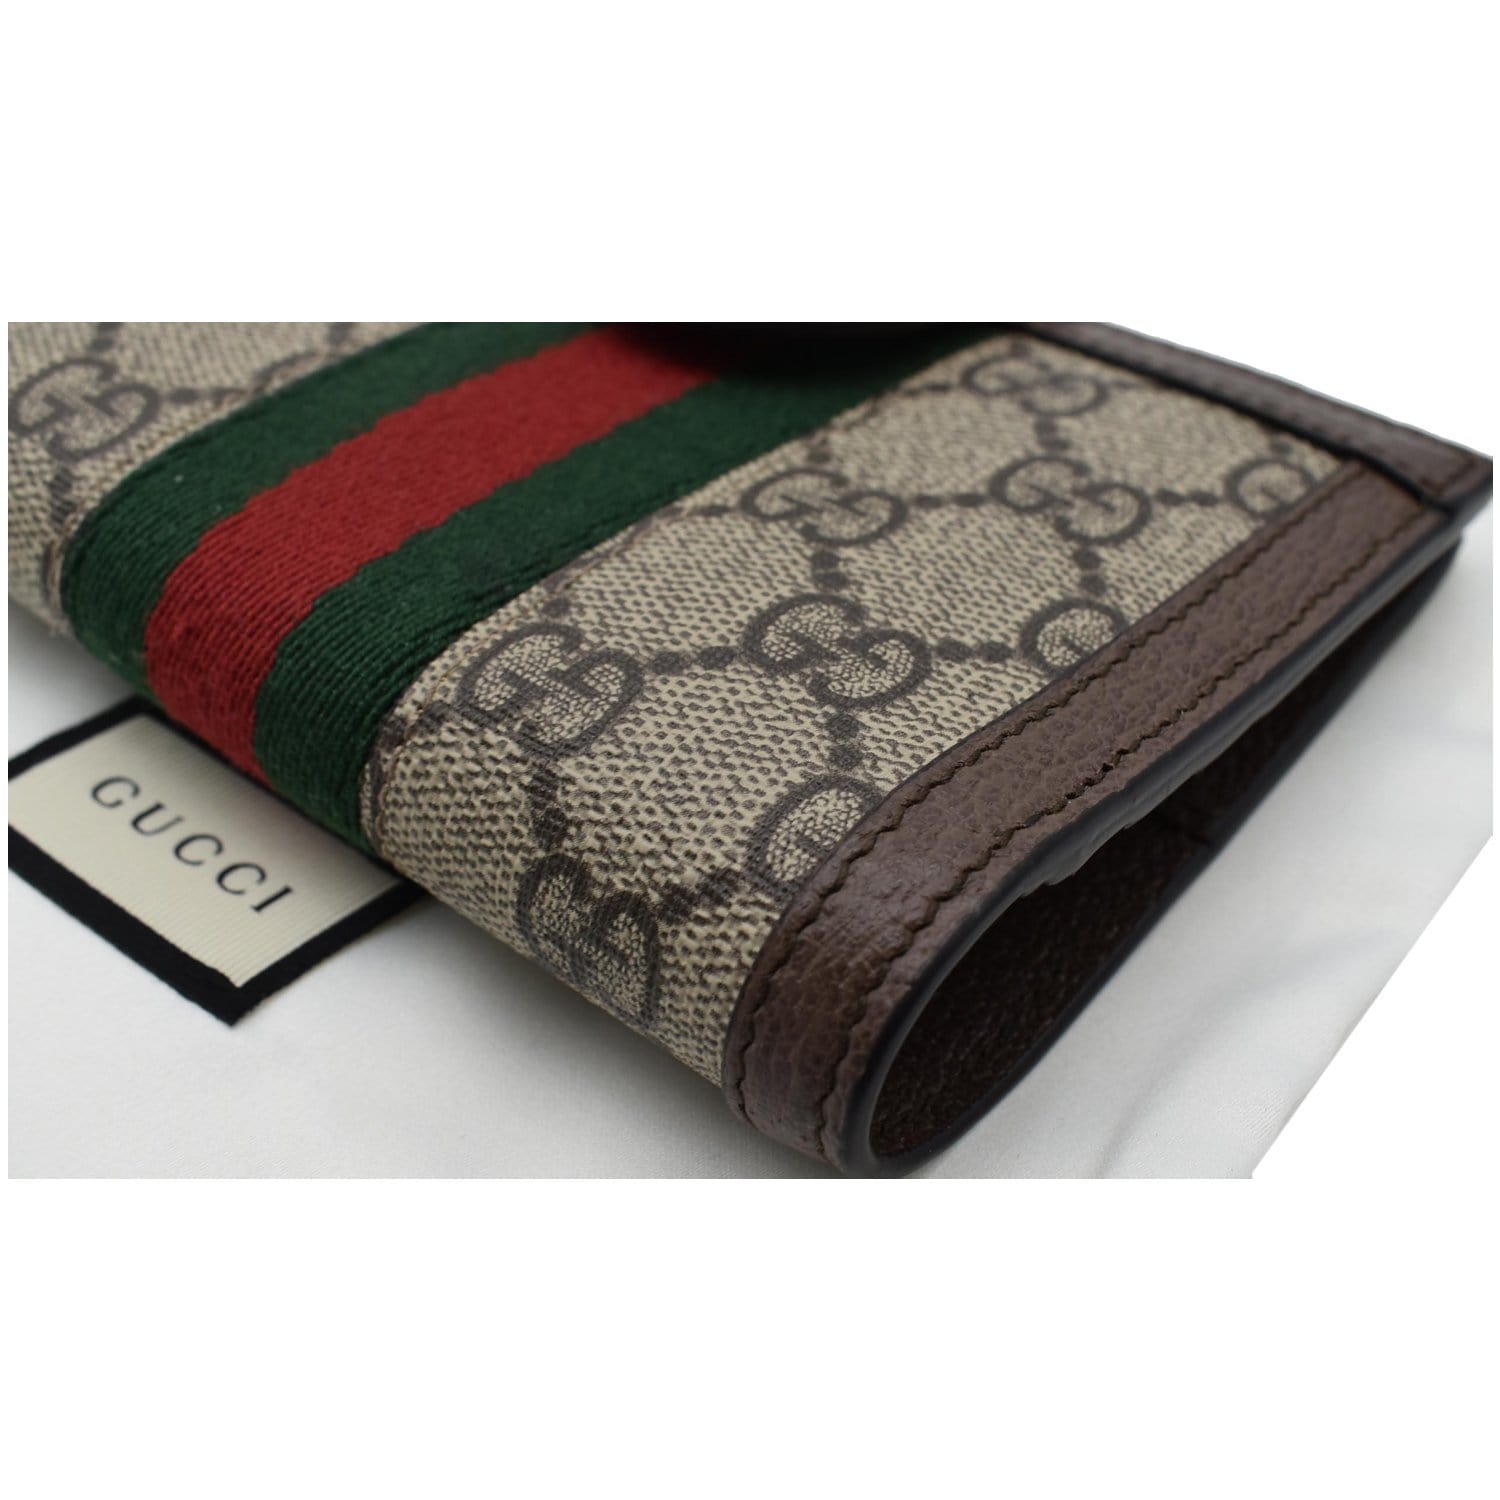 Gucci Monogram Wallet for Men